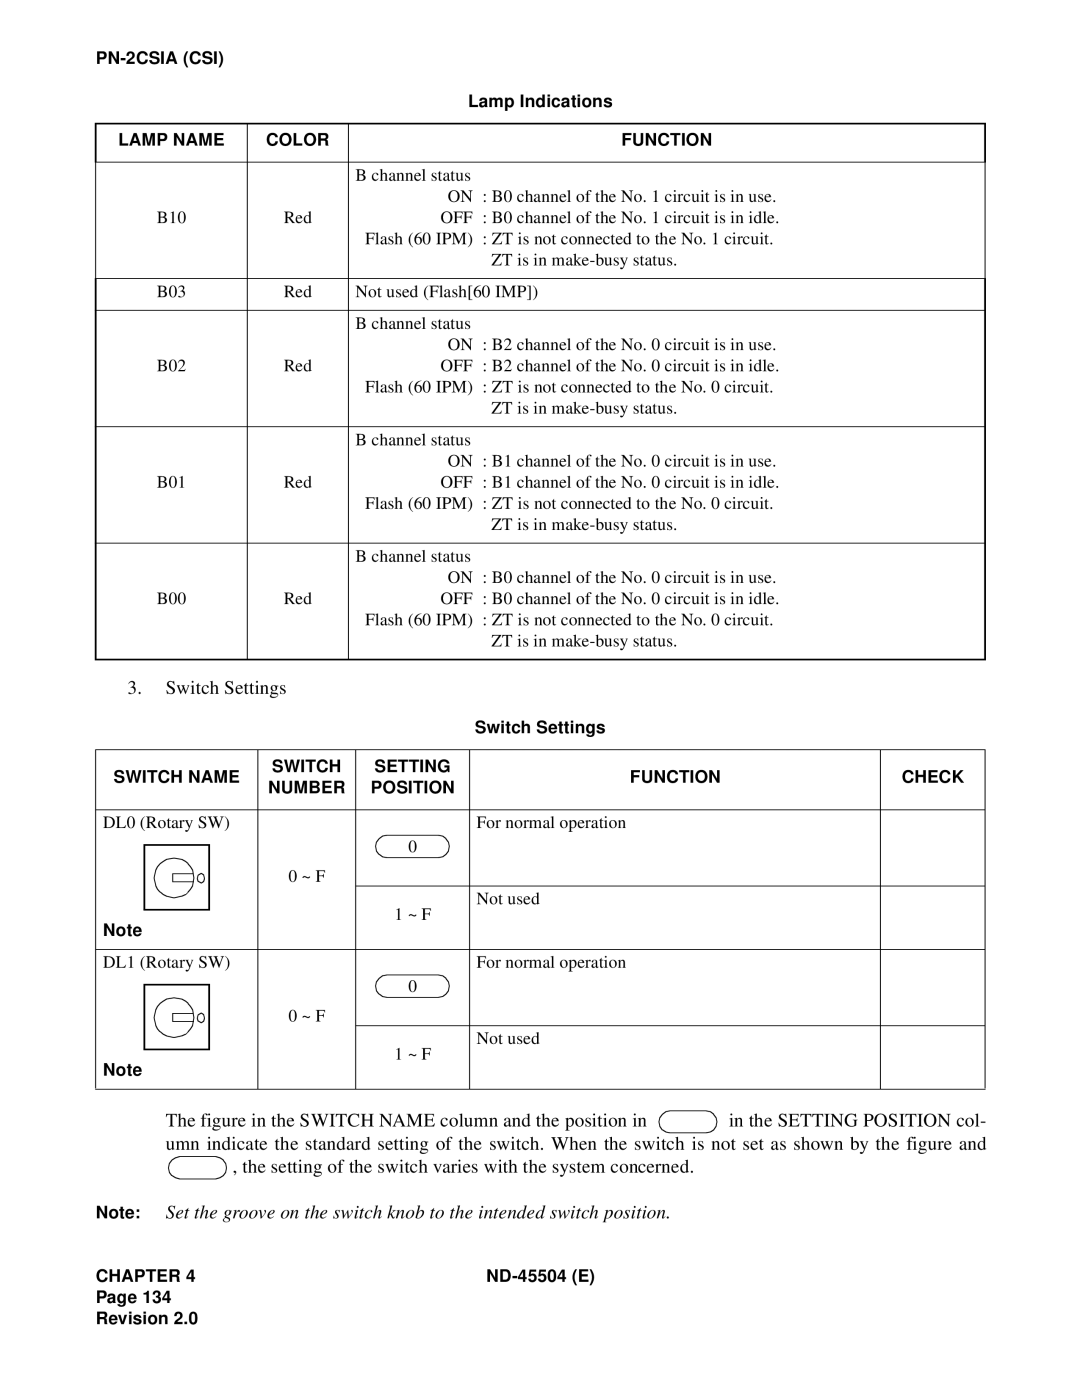 NEC 2000 IVS manual Switch Settings, B channel status 